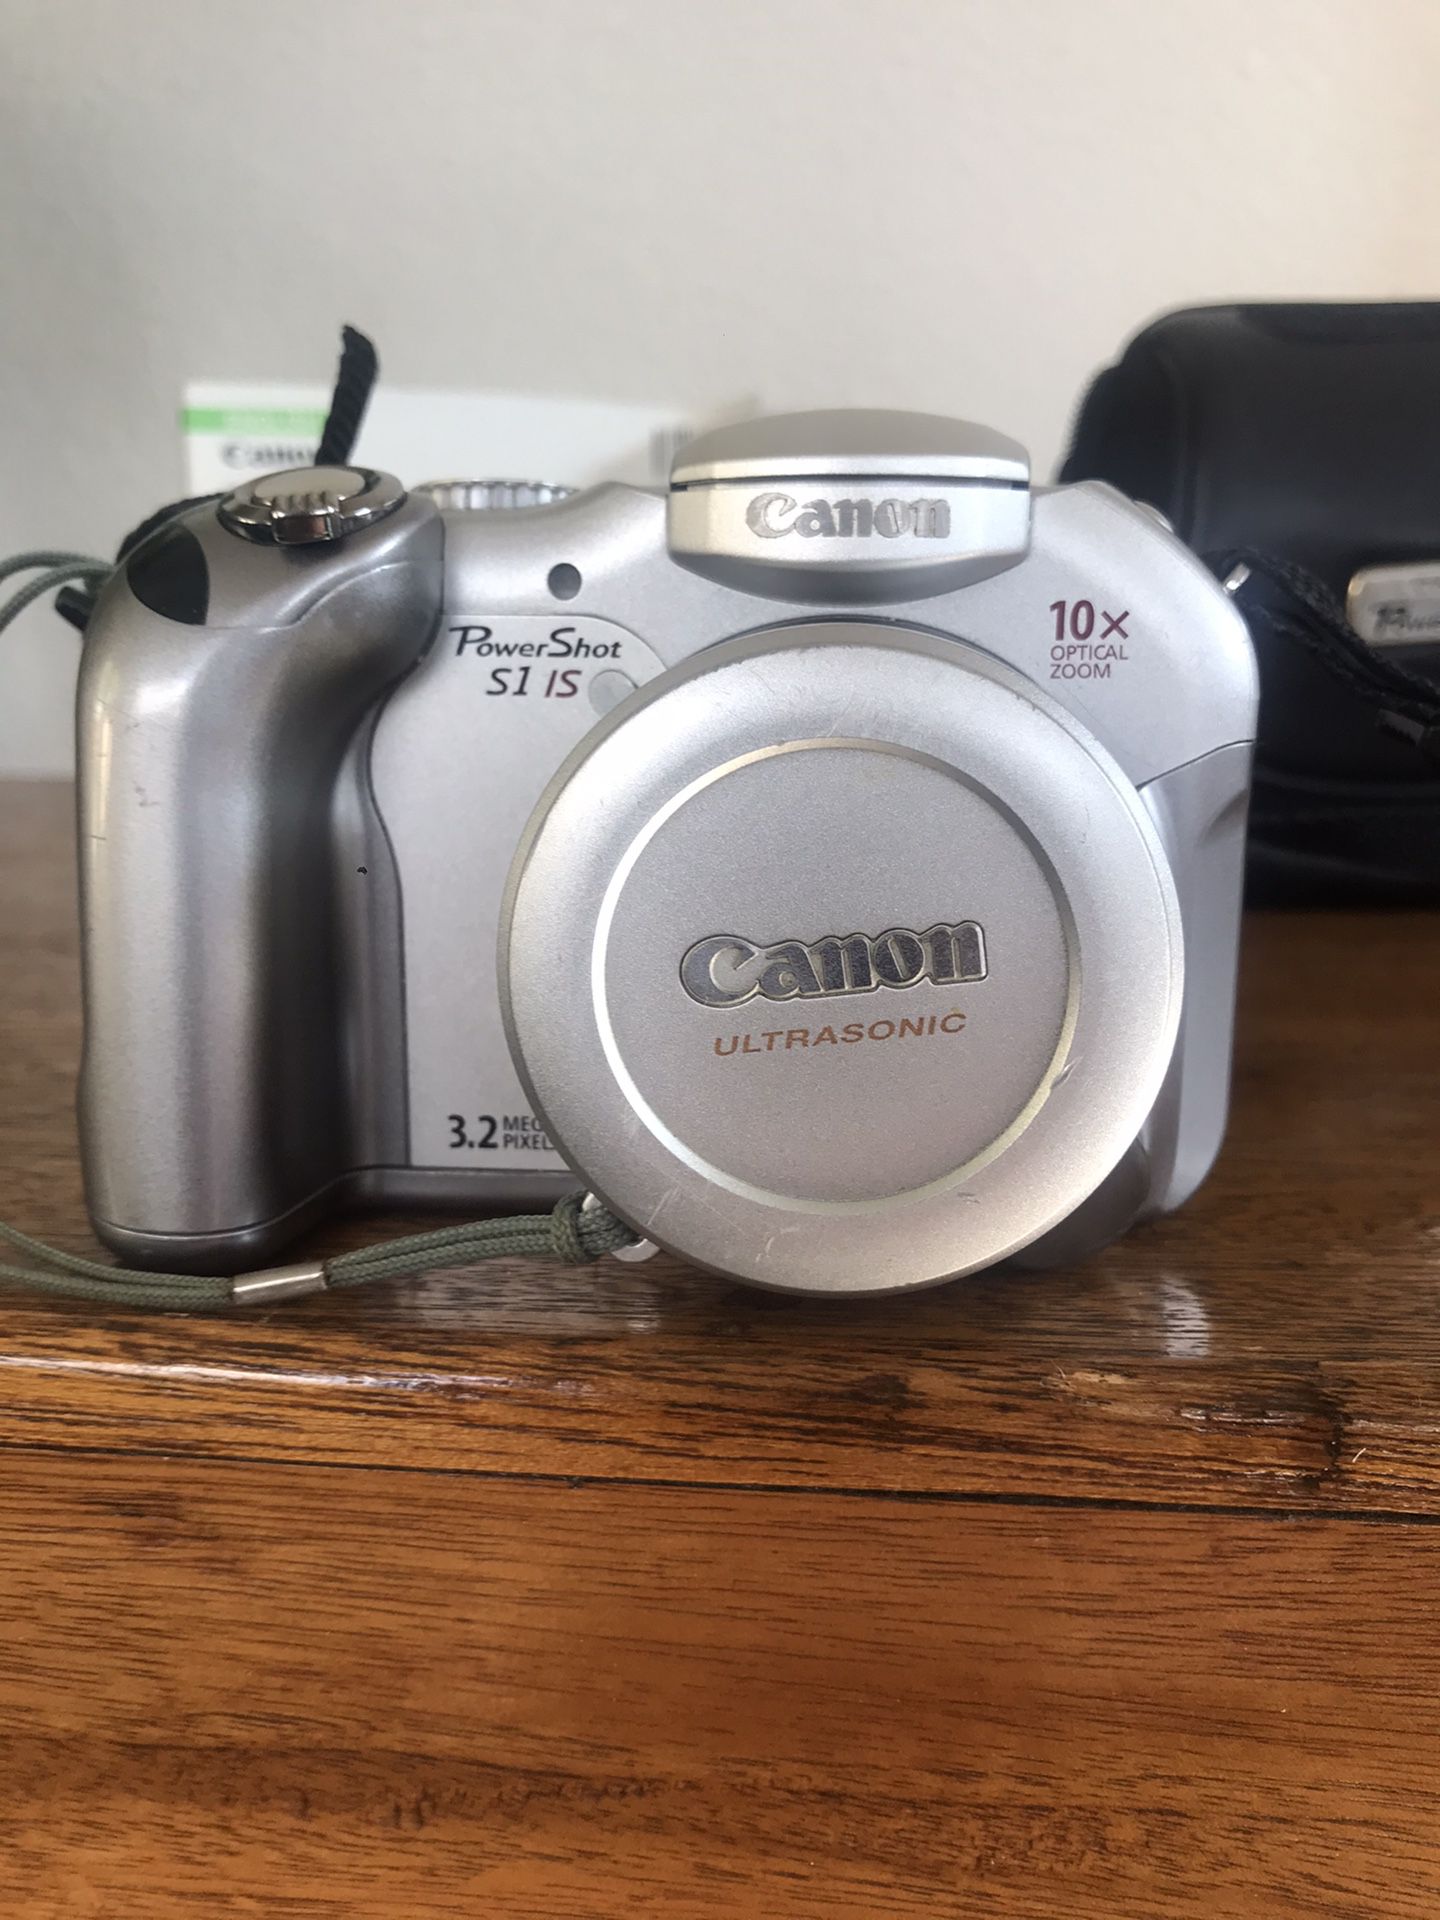 Canon S1 IS Digital PowerShot Camera